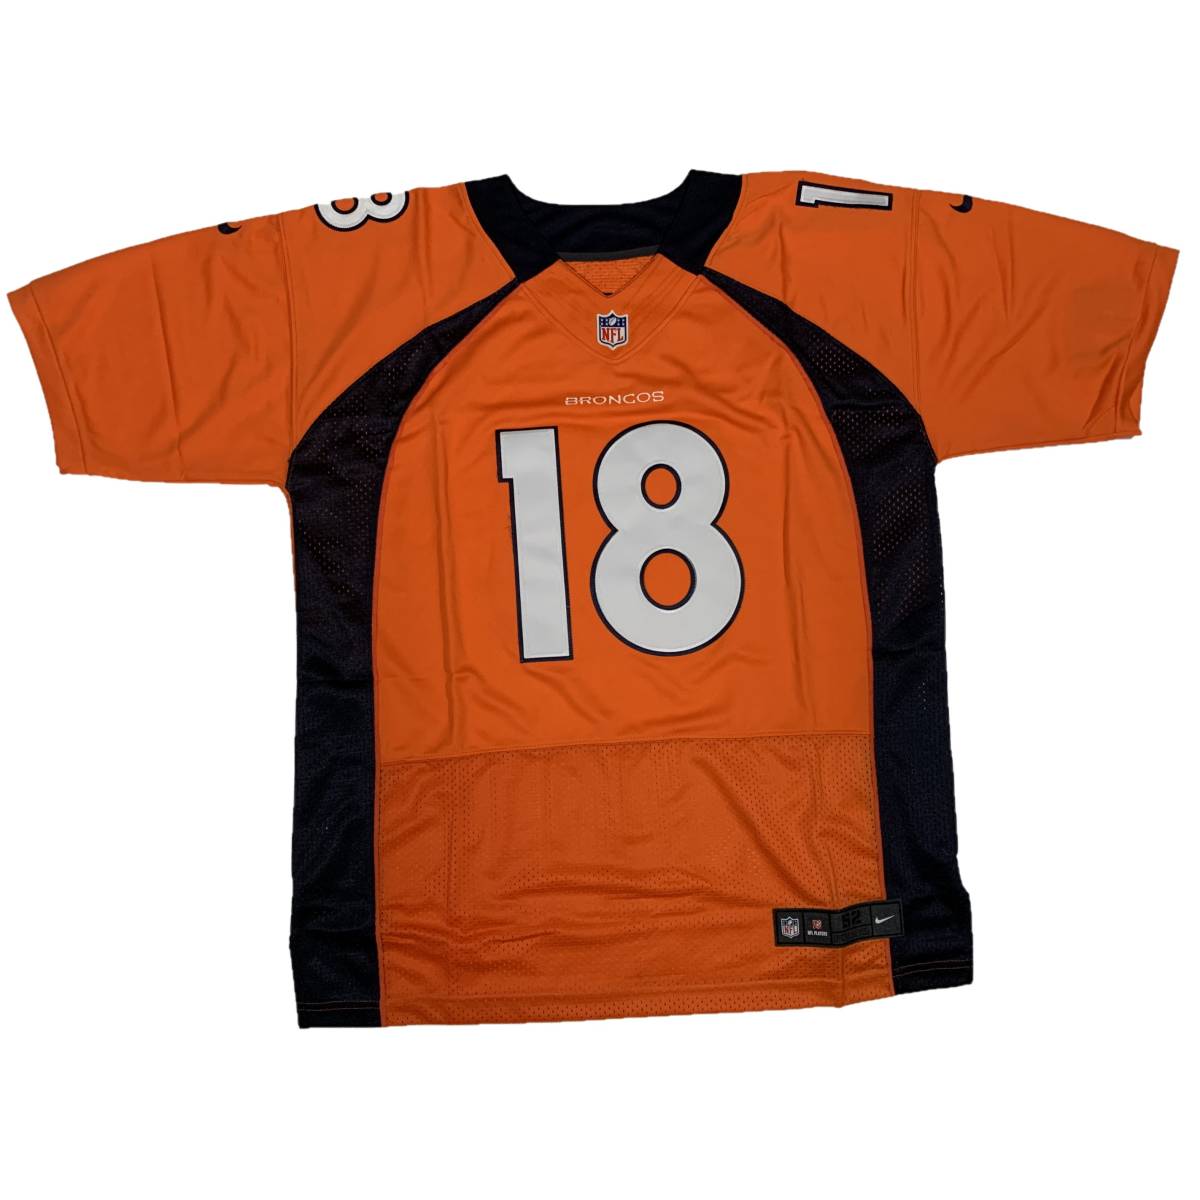 NFL PLAYERS Denver Broncos デンバー ブロンコス ♯18 フットボールシャツ (52サイズ) 【並行輸入品】